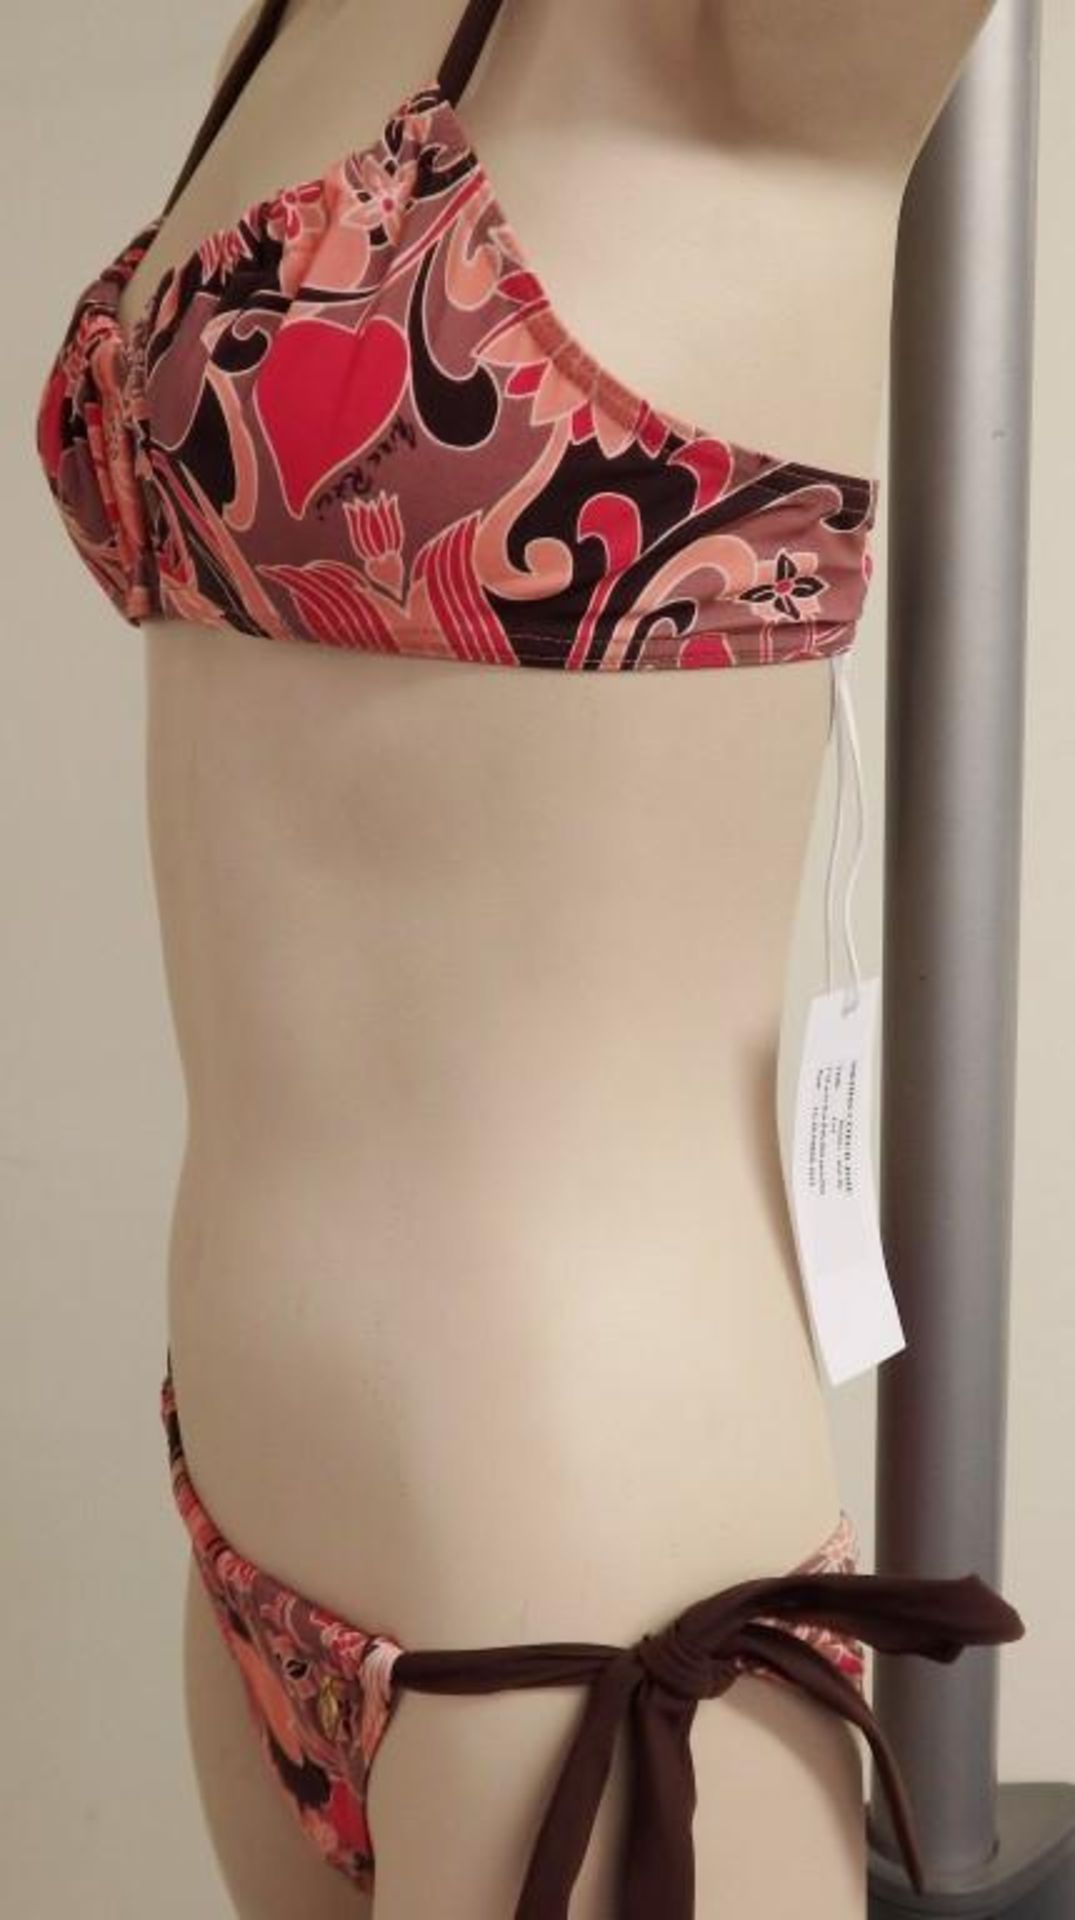 1 x Nina Ricci “COEUR JOIE” 2-piece Swimwear Set – SW06 – CL011 - Includes Brassiere & Slip - - Image 7 of 7